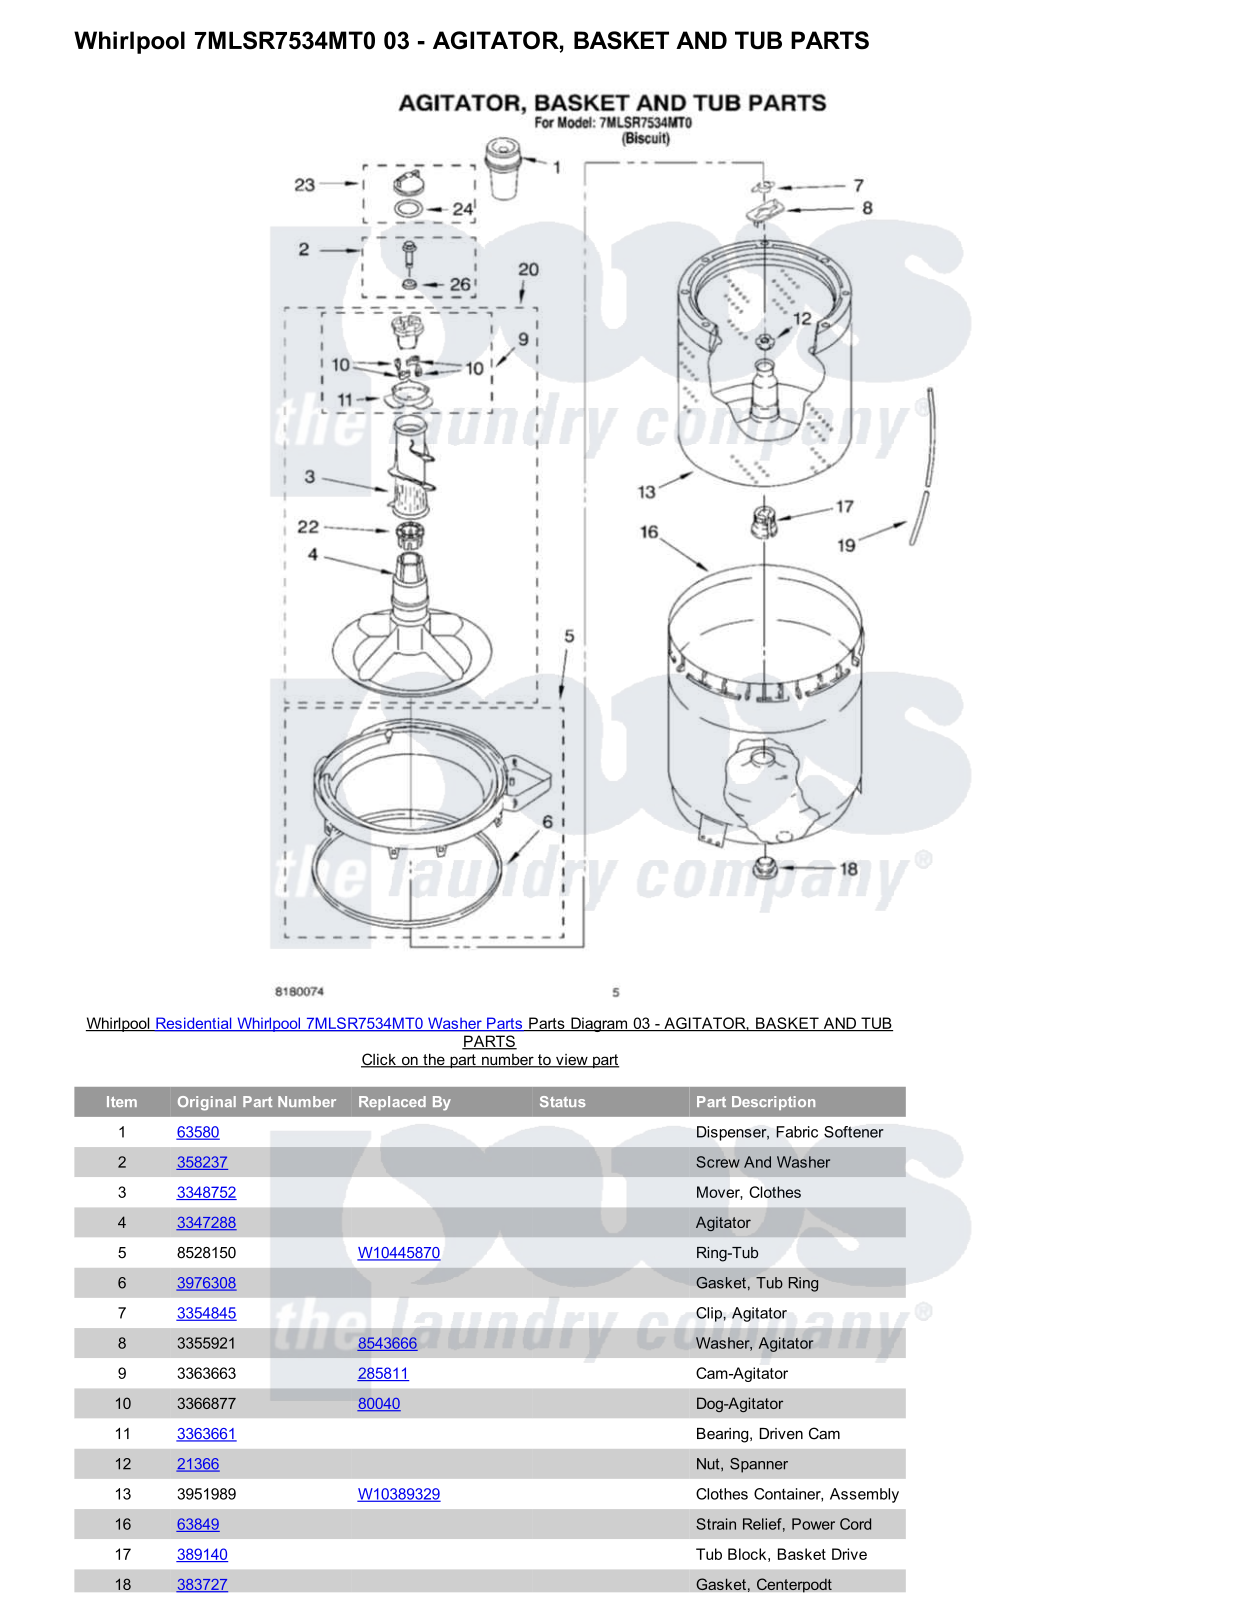 Whirlpool 7MLSR7534MT0 Parts Diagram